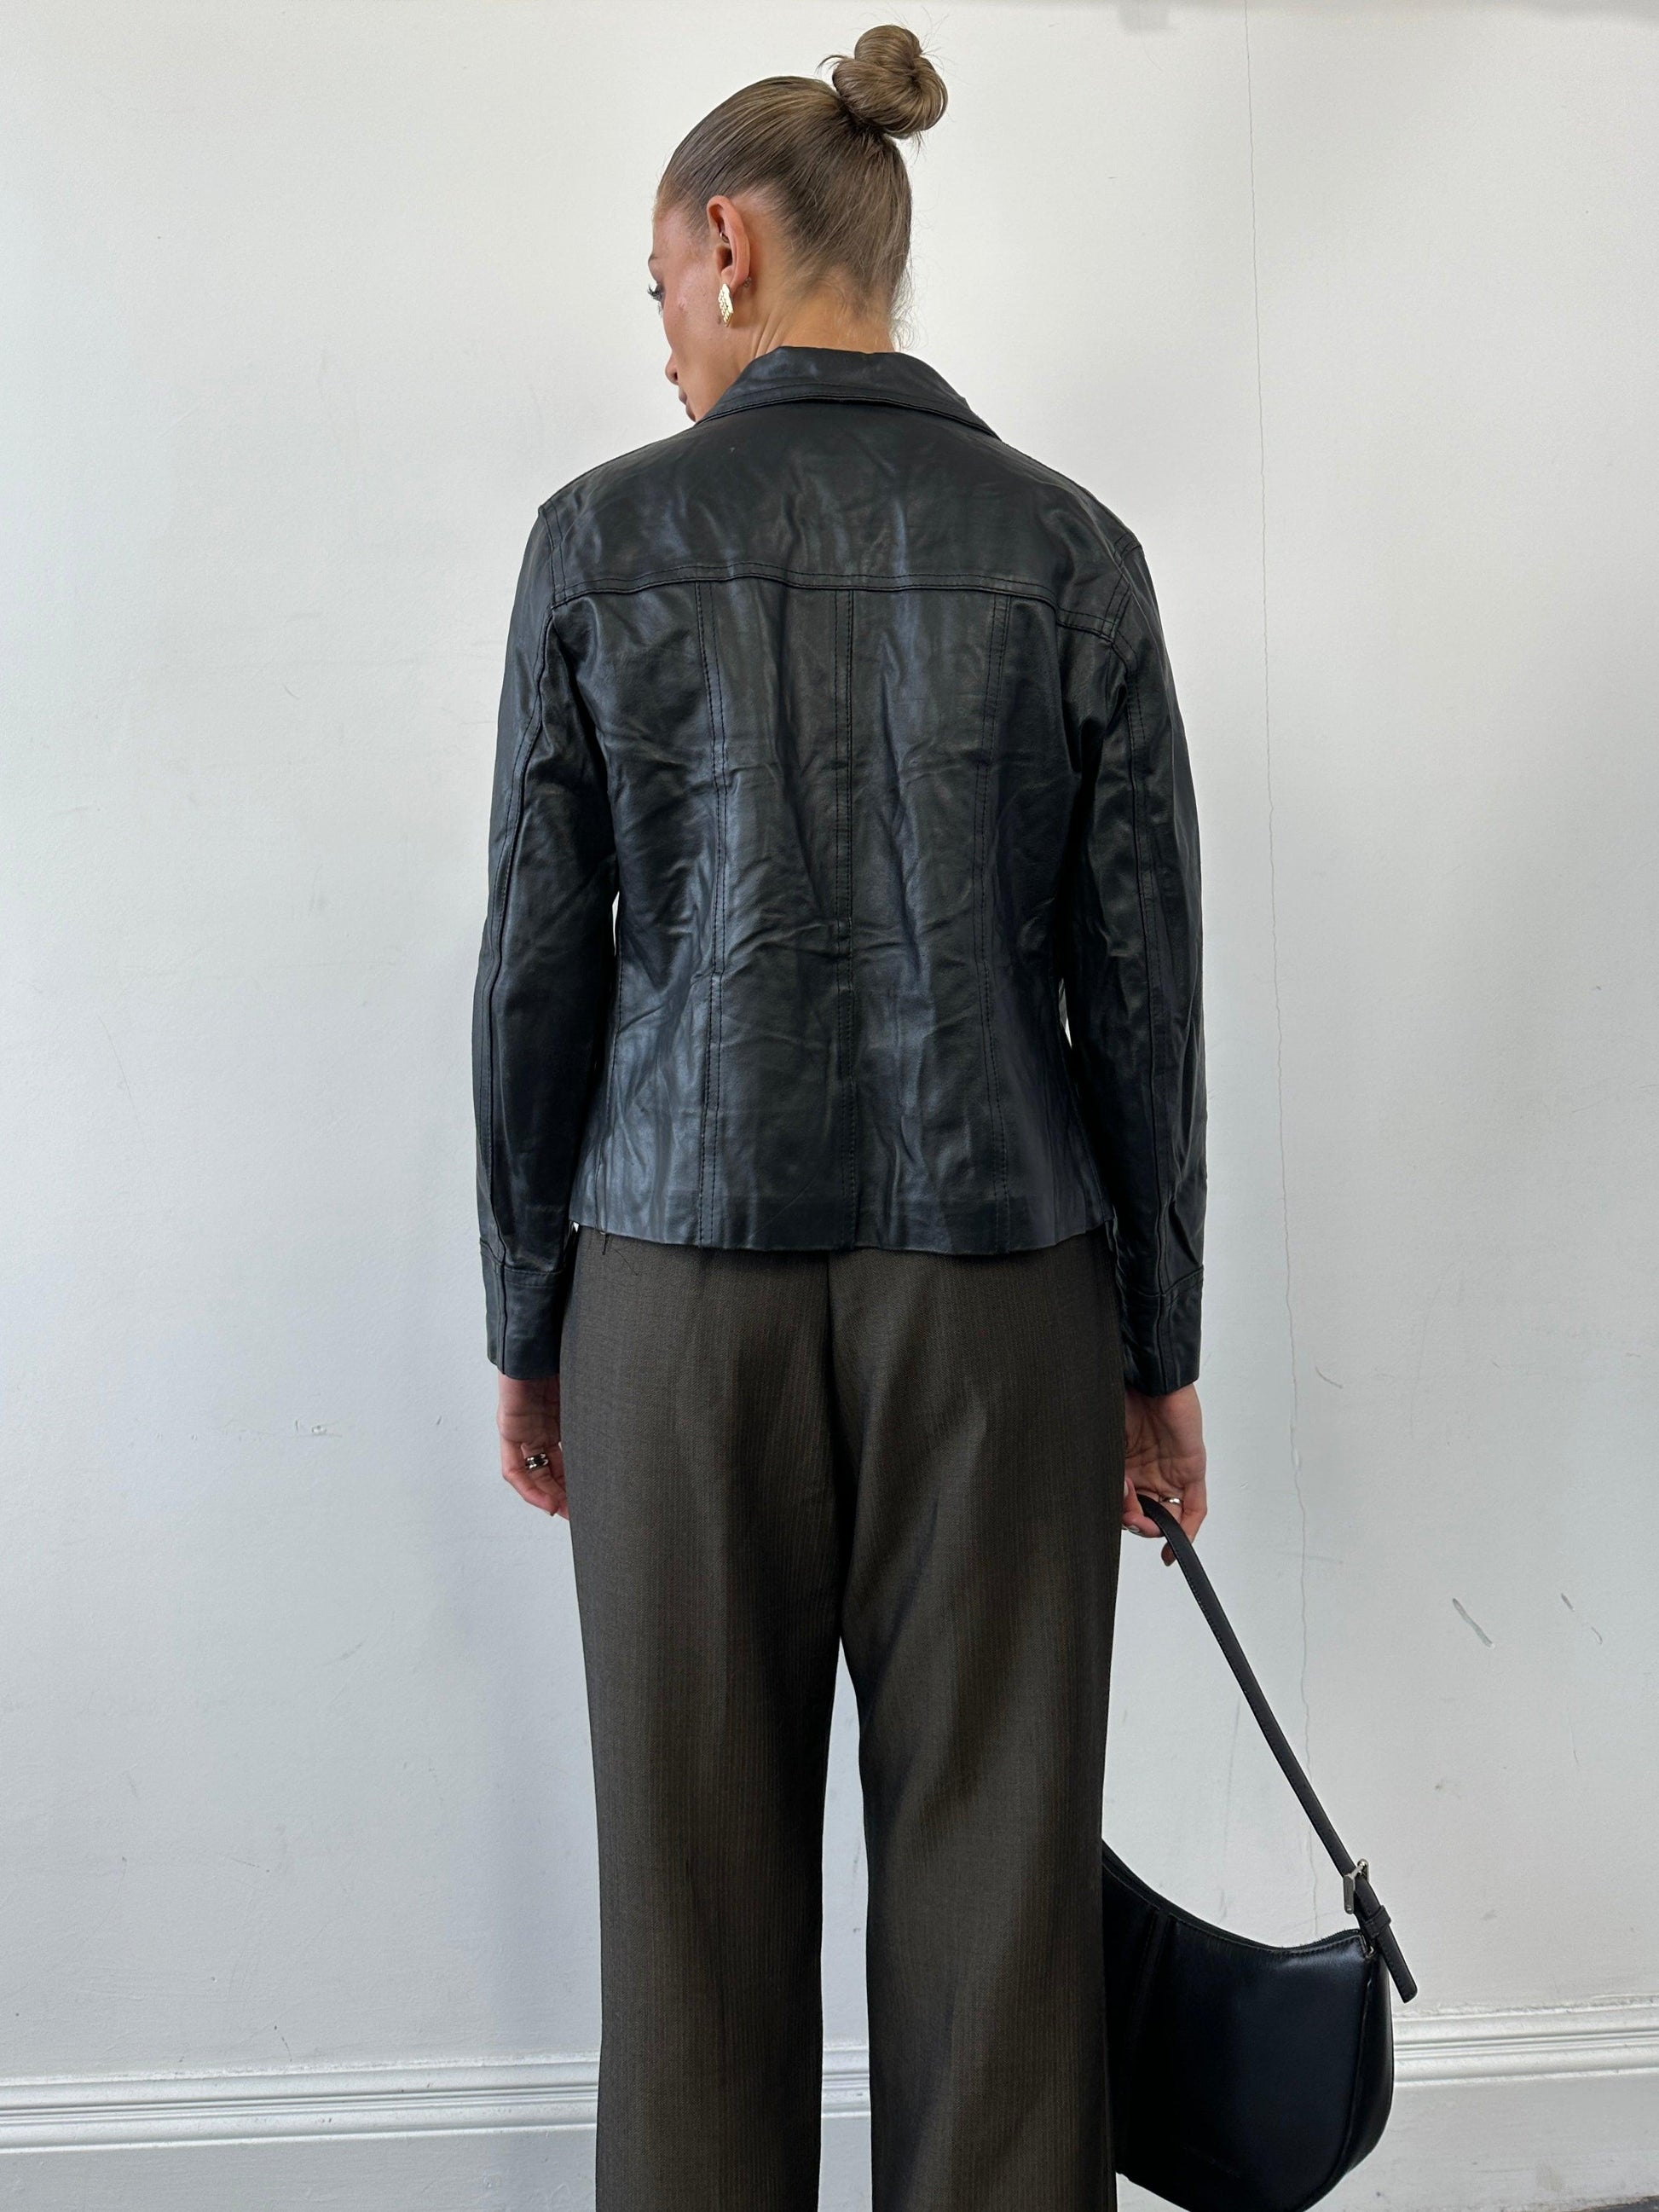 Vintage Minimal Zip Up Leather Jacket - S - Known Source